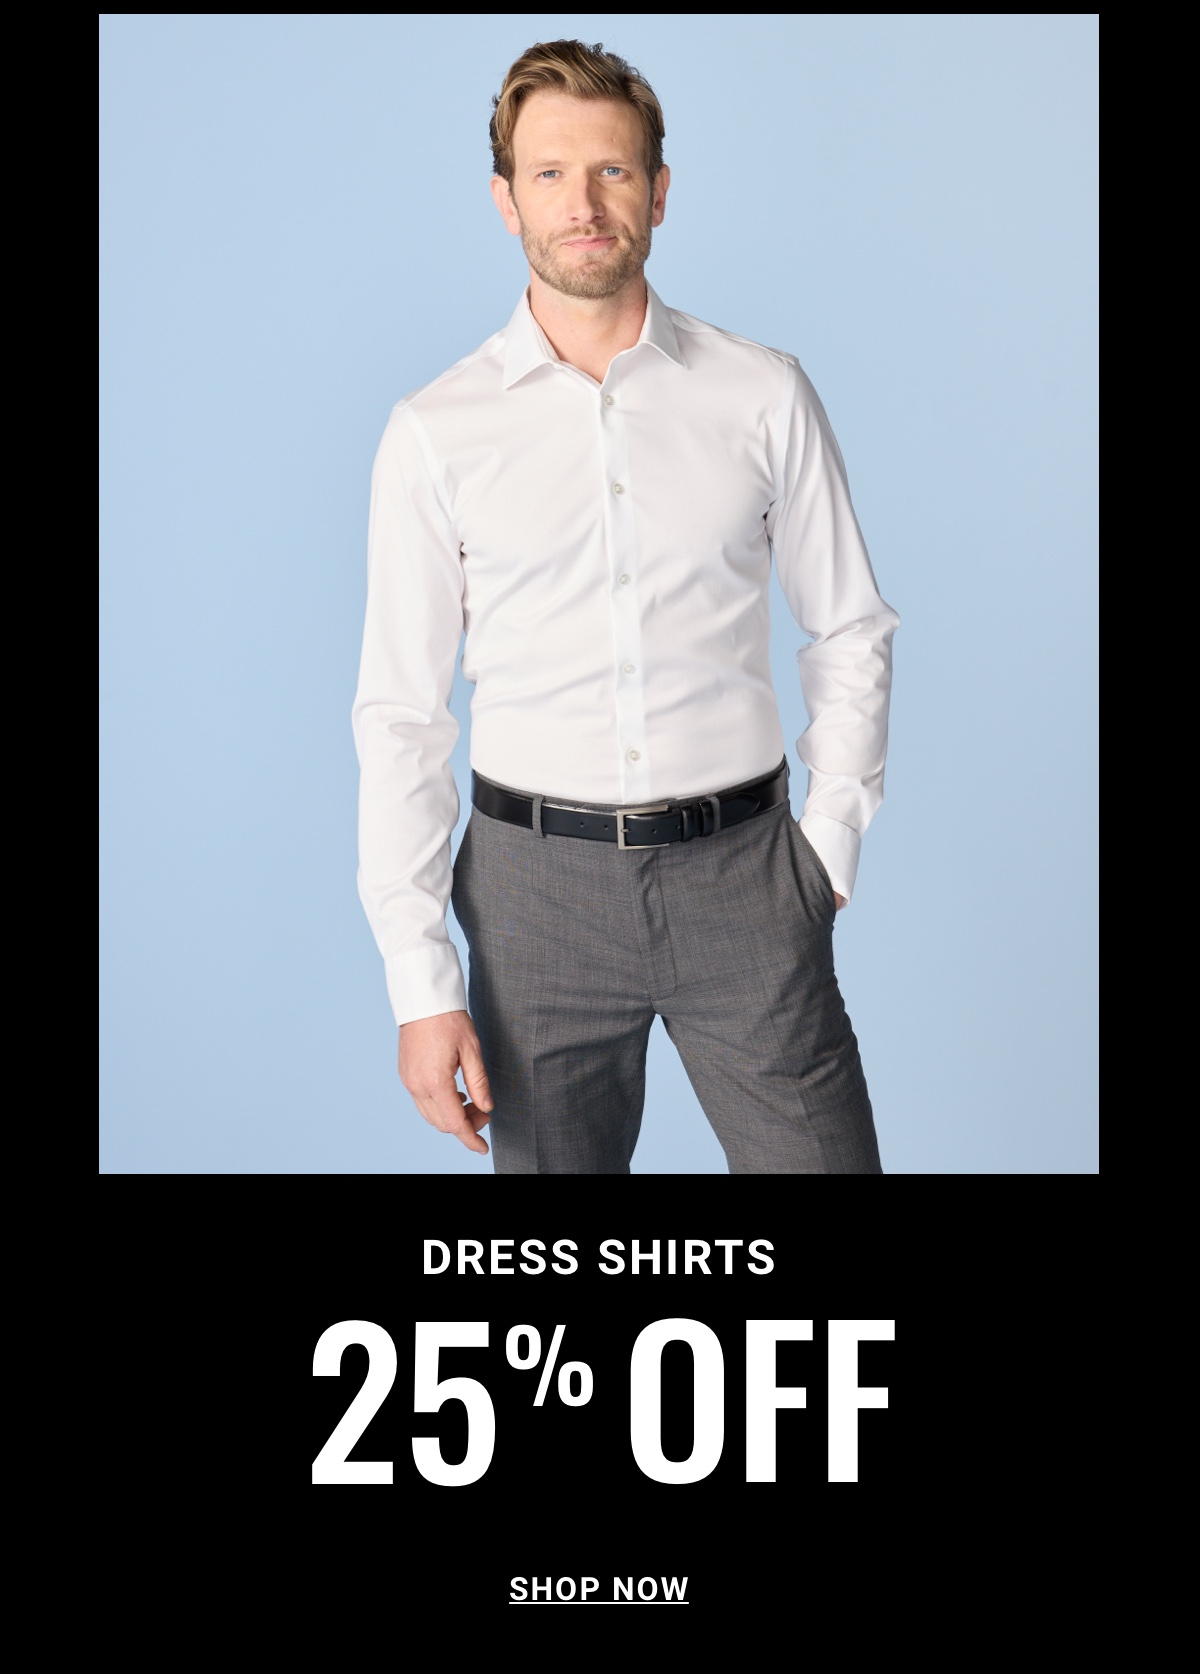 25% Off Dress Shirts